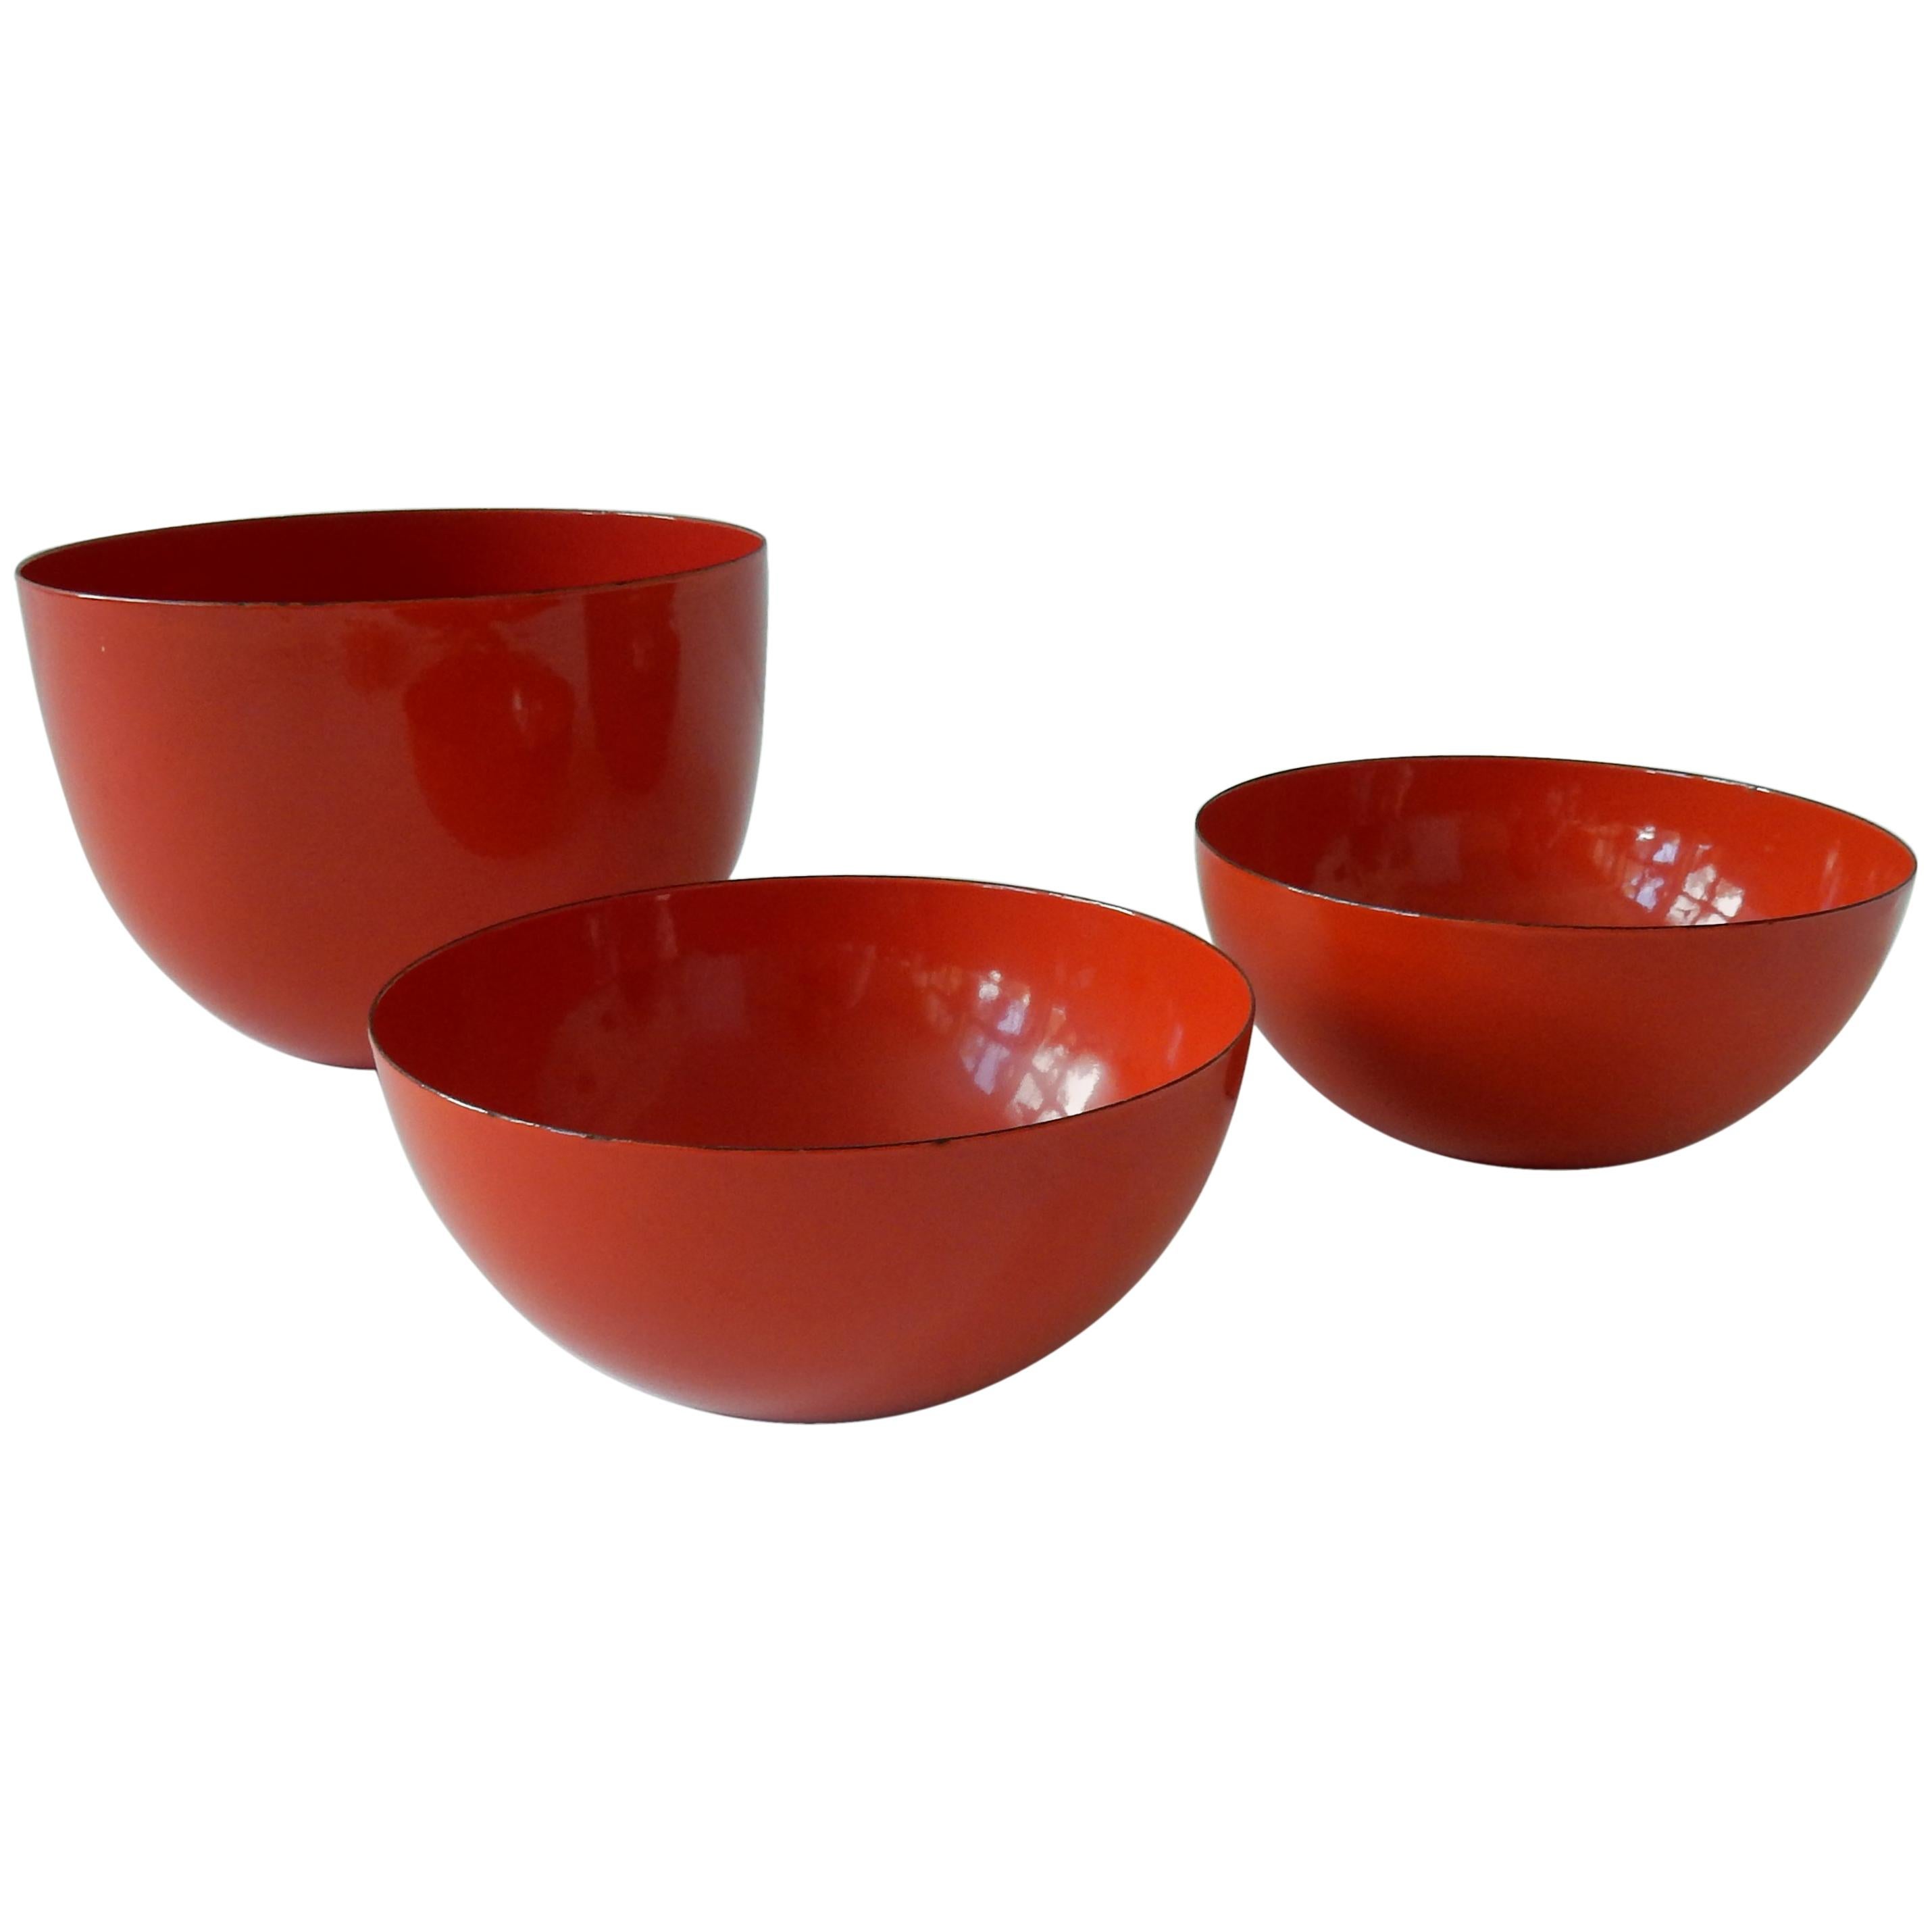 Set of three Orange-Red Enameled Bowls by Kaj Franck for Finel, Finland, 1960s